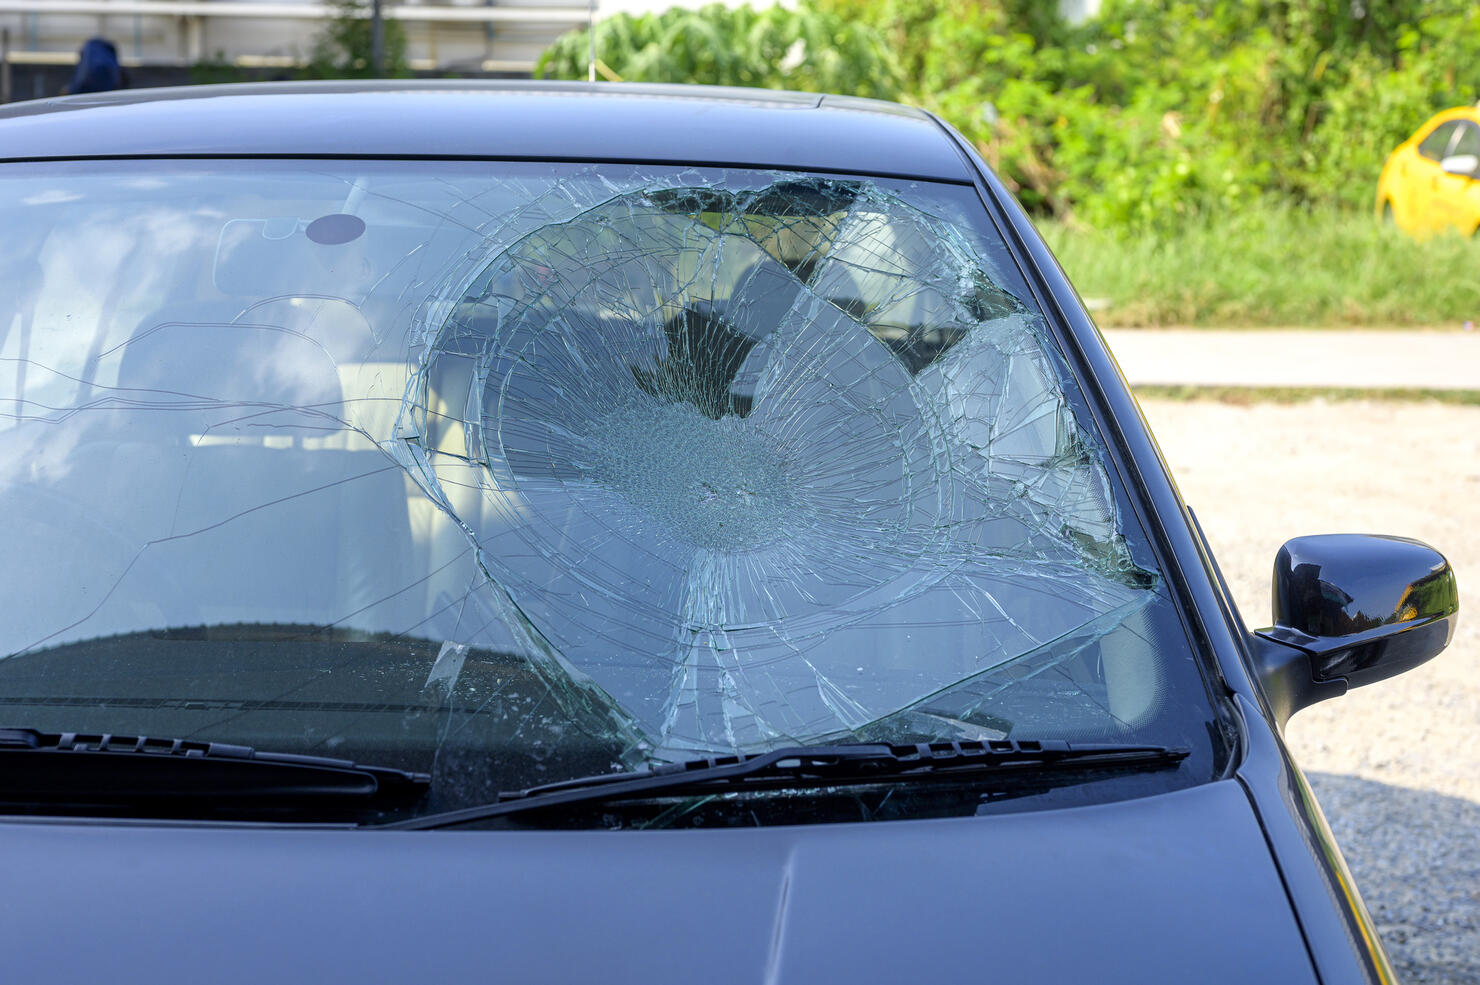 Broken car windshield in car accident.